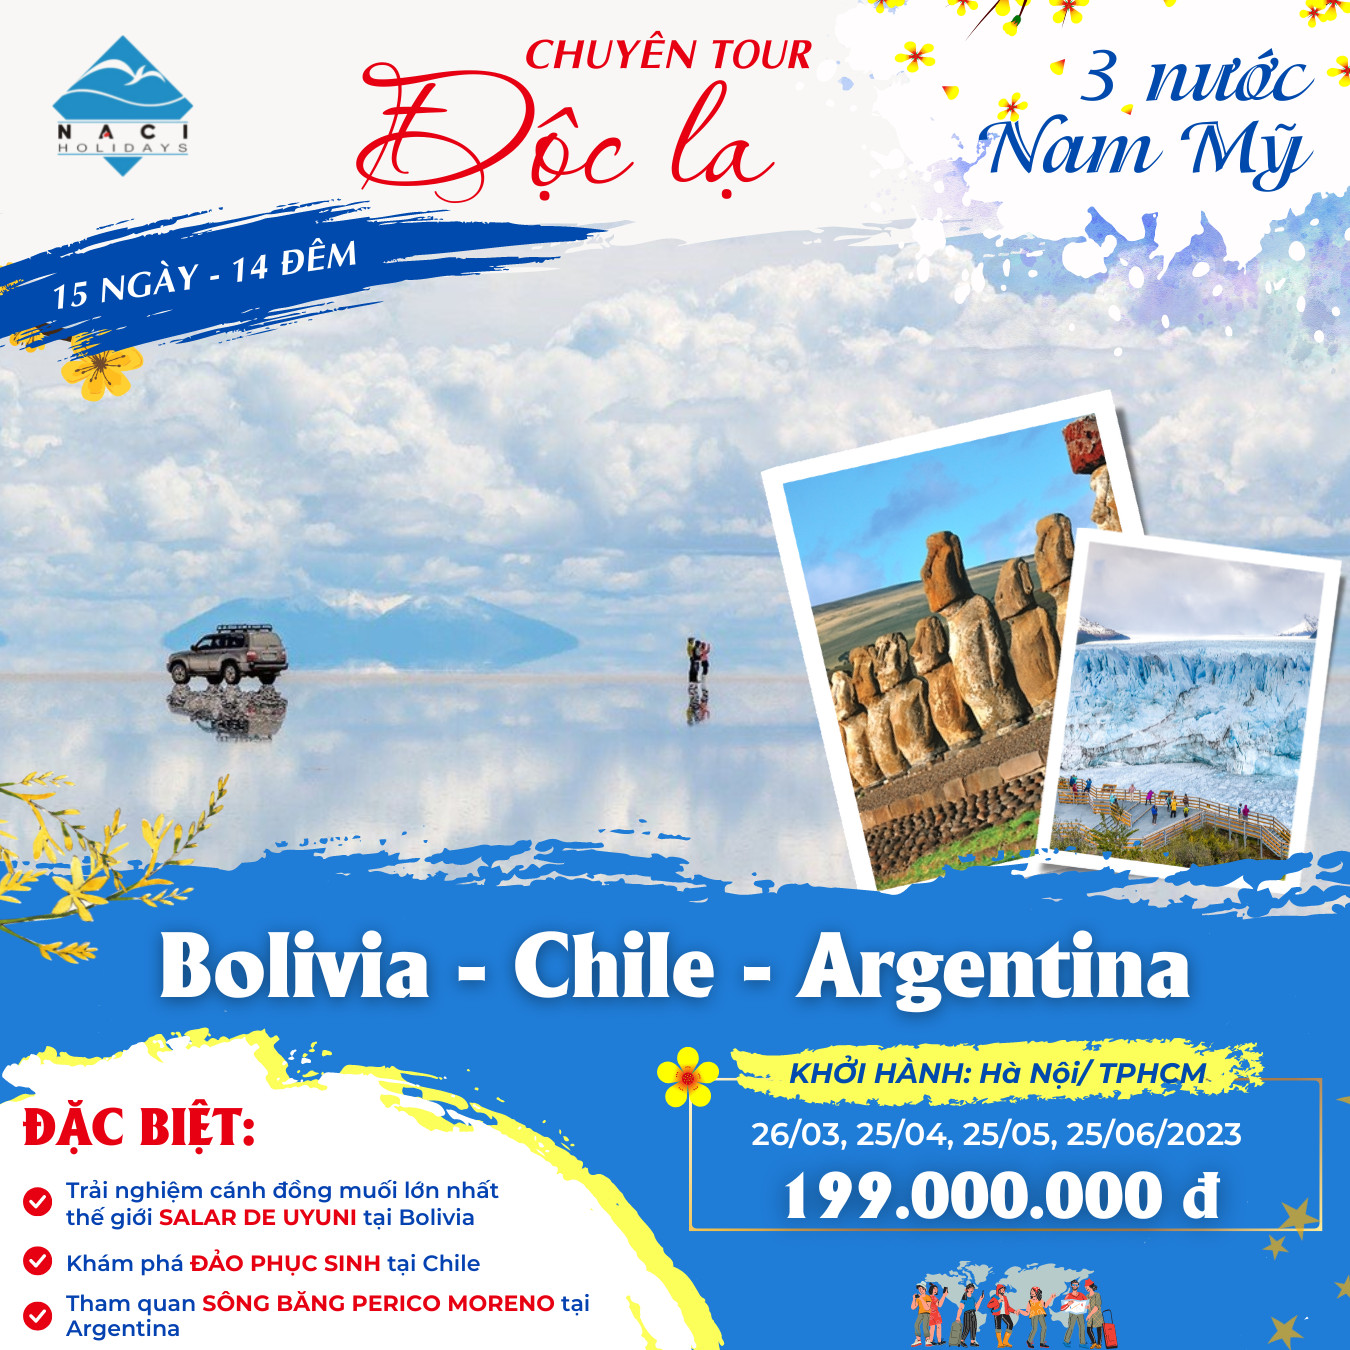 chuyen-tour-doc-la-3-nuoc-nam-my-bolivia-chile-argentina